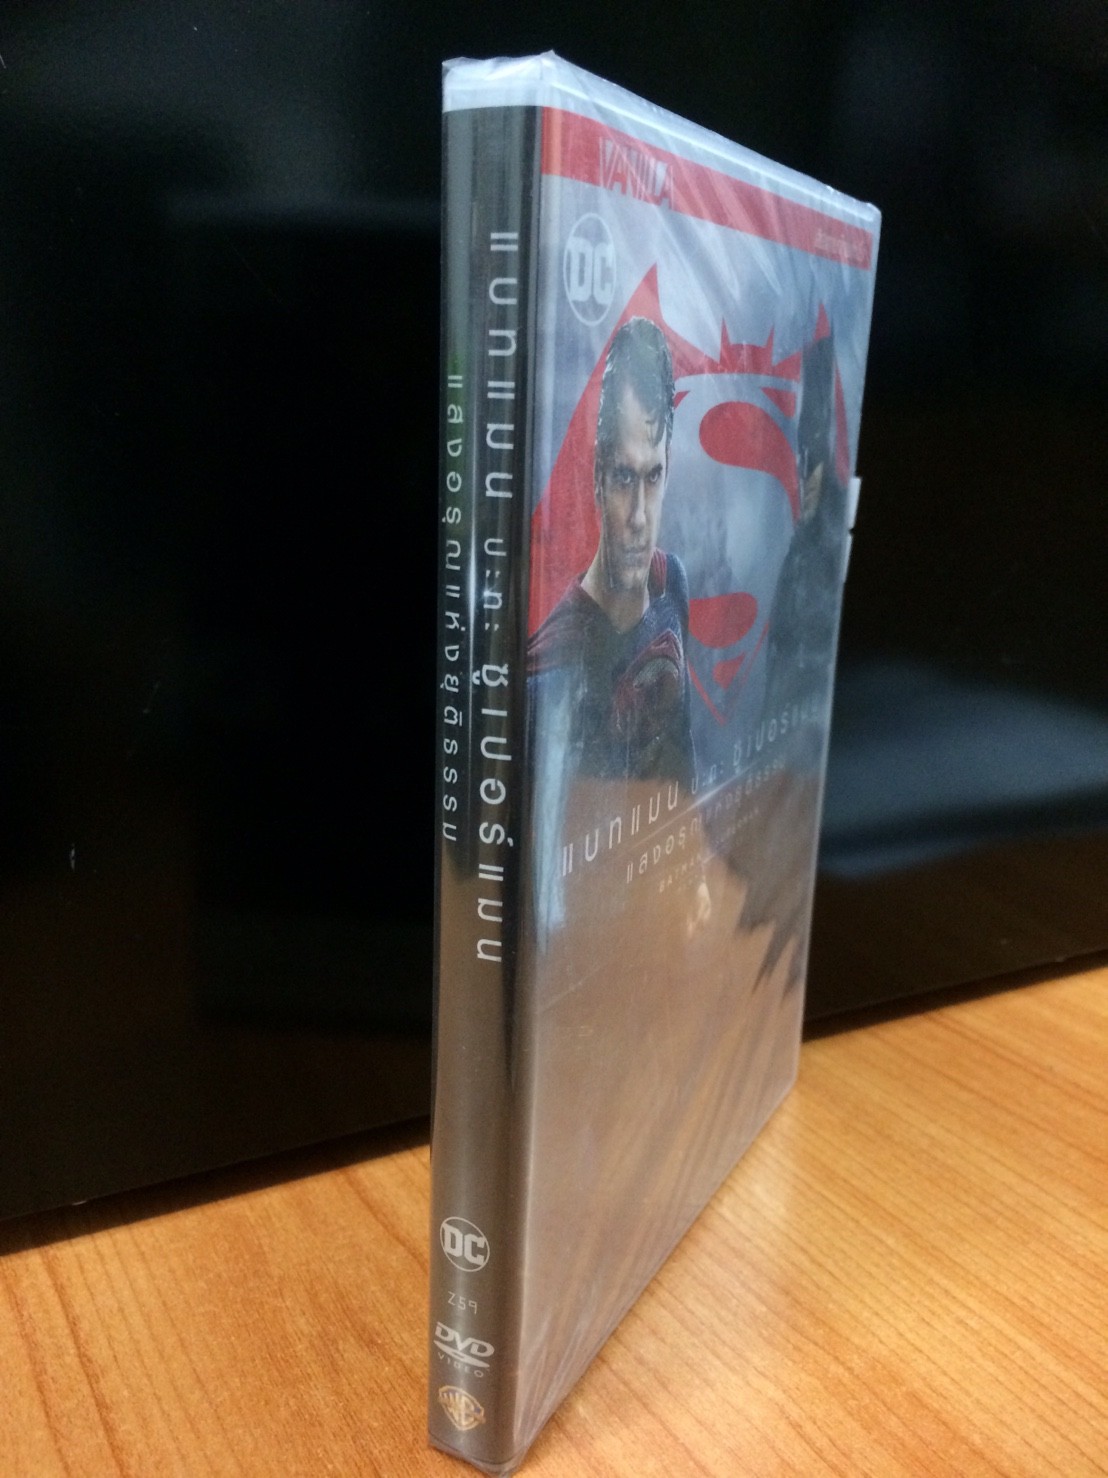 DVDหนัง แบทแมน ปะทะ ซูเปอร์แมน แสงอรุณแห่งยุติธรรม BATMAN V SUPERMAN DAWN OF JUSTICE(DVDTHAI89170-แสงอรุณแห่งยุติธรรม) พากย์ไทย เท่านั้น หนัง หนังต่อสู้ ฮีโร่ ดีวีดี แผ่นหนัง ดูหนัง หนังดี แบบกล่อง มาสเตอร์แท้  STARMART